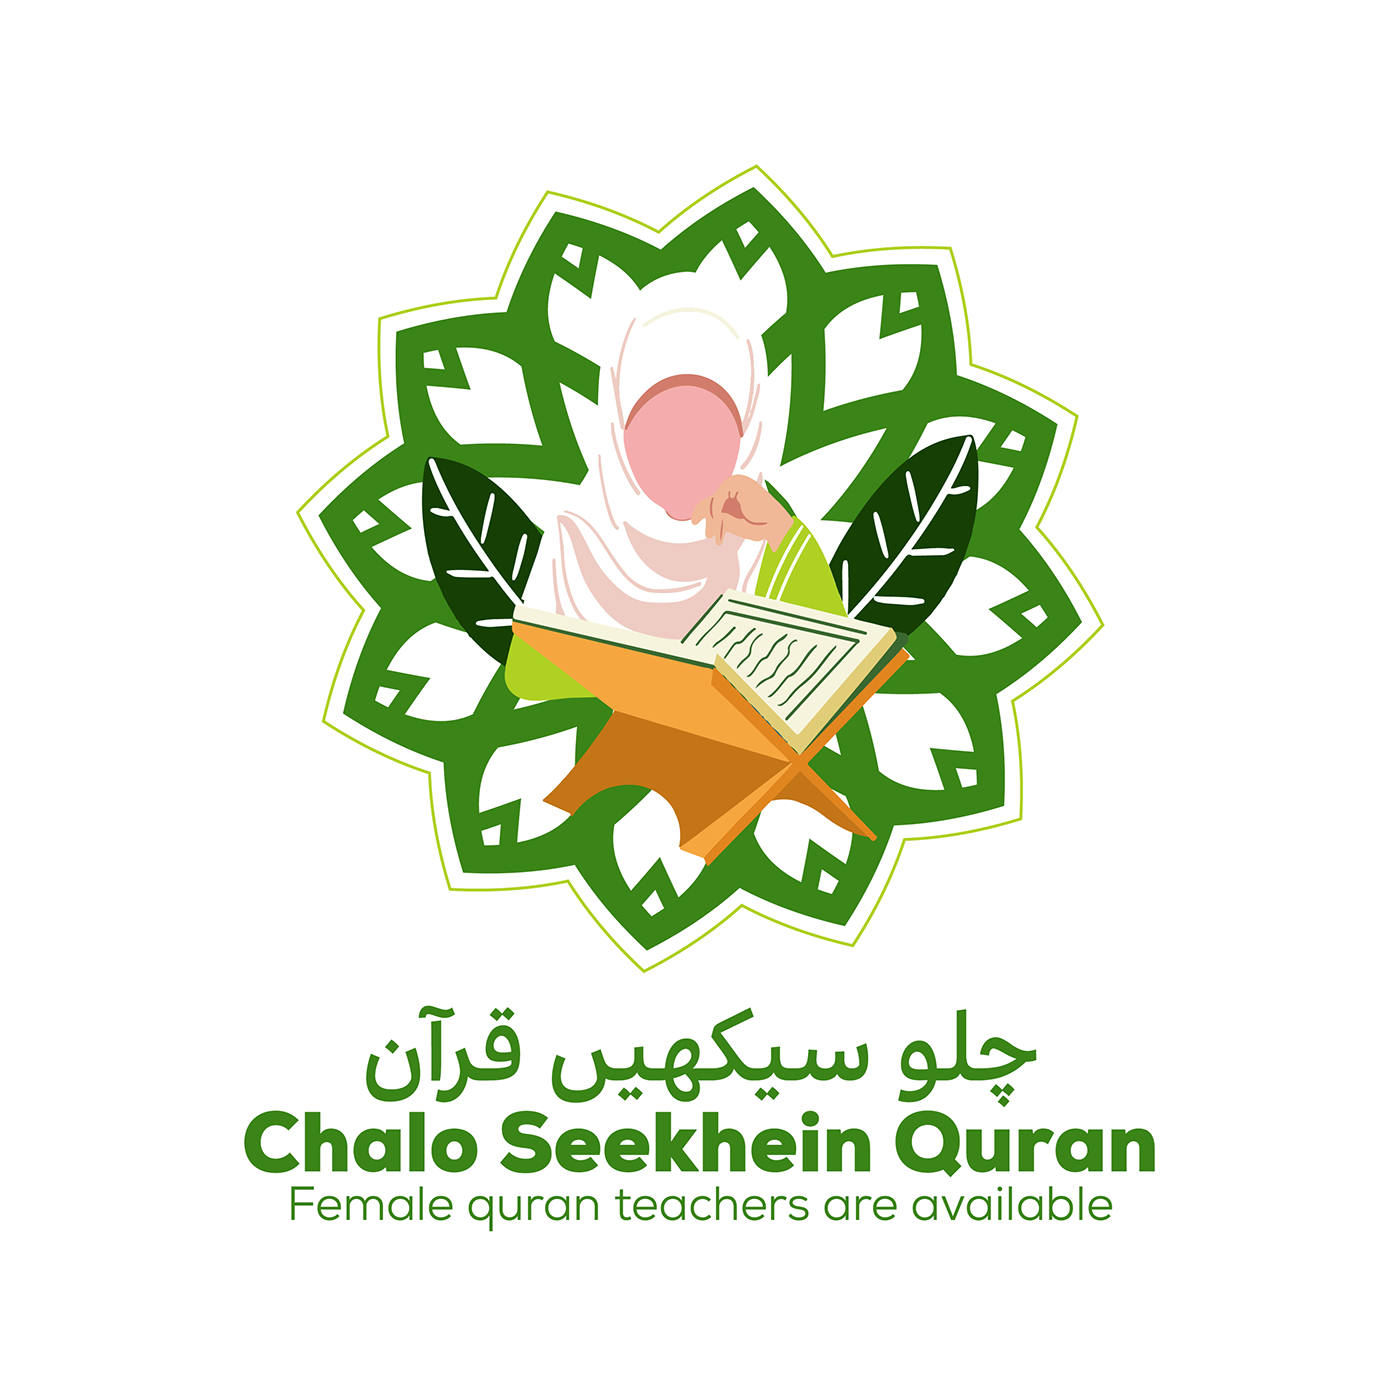 Chalo Seekhein Quran, a project by MOHSIN FIAZ